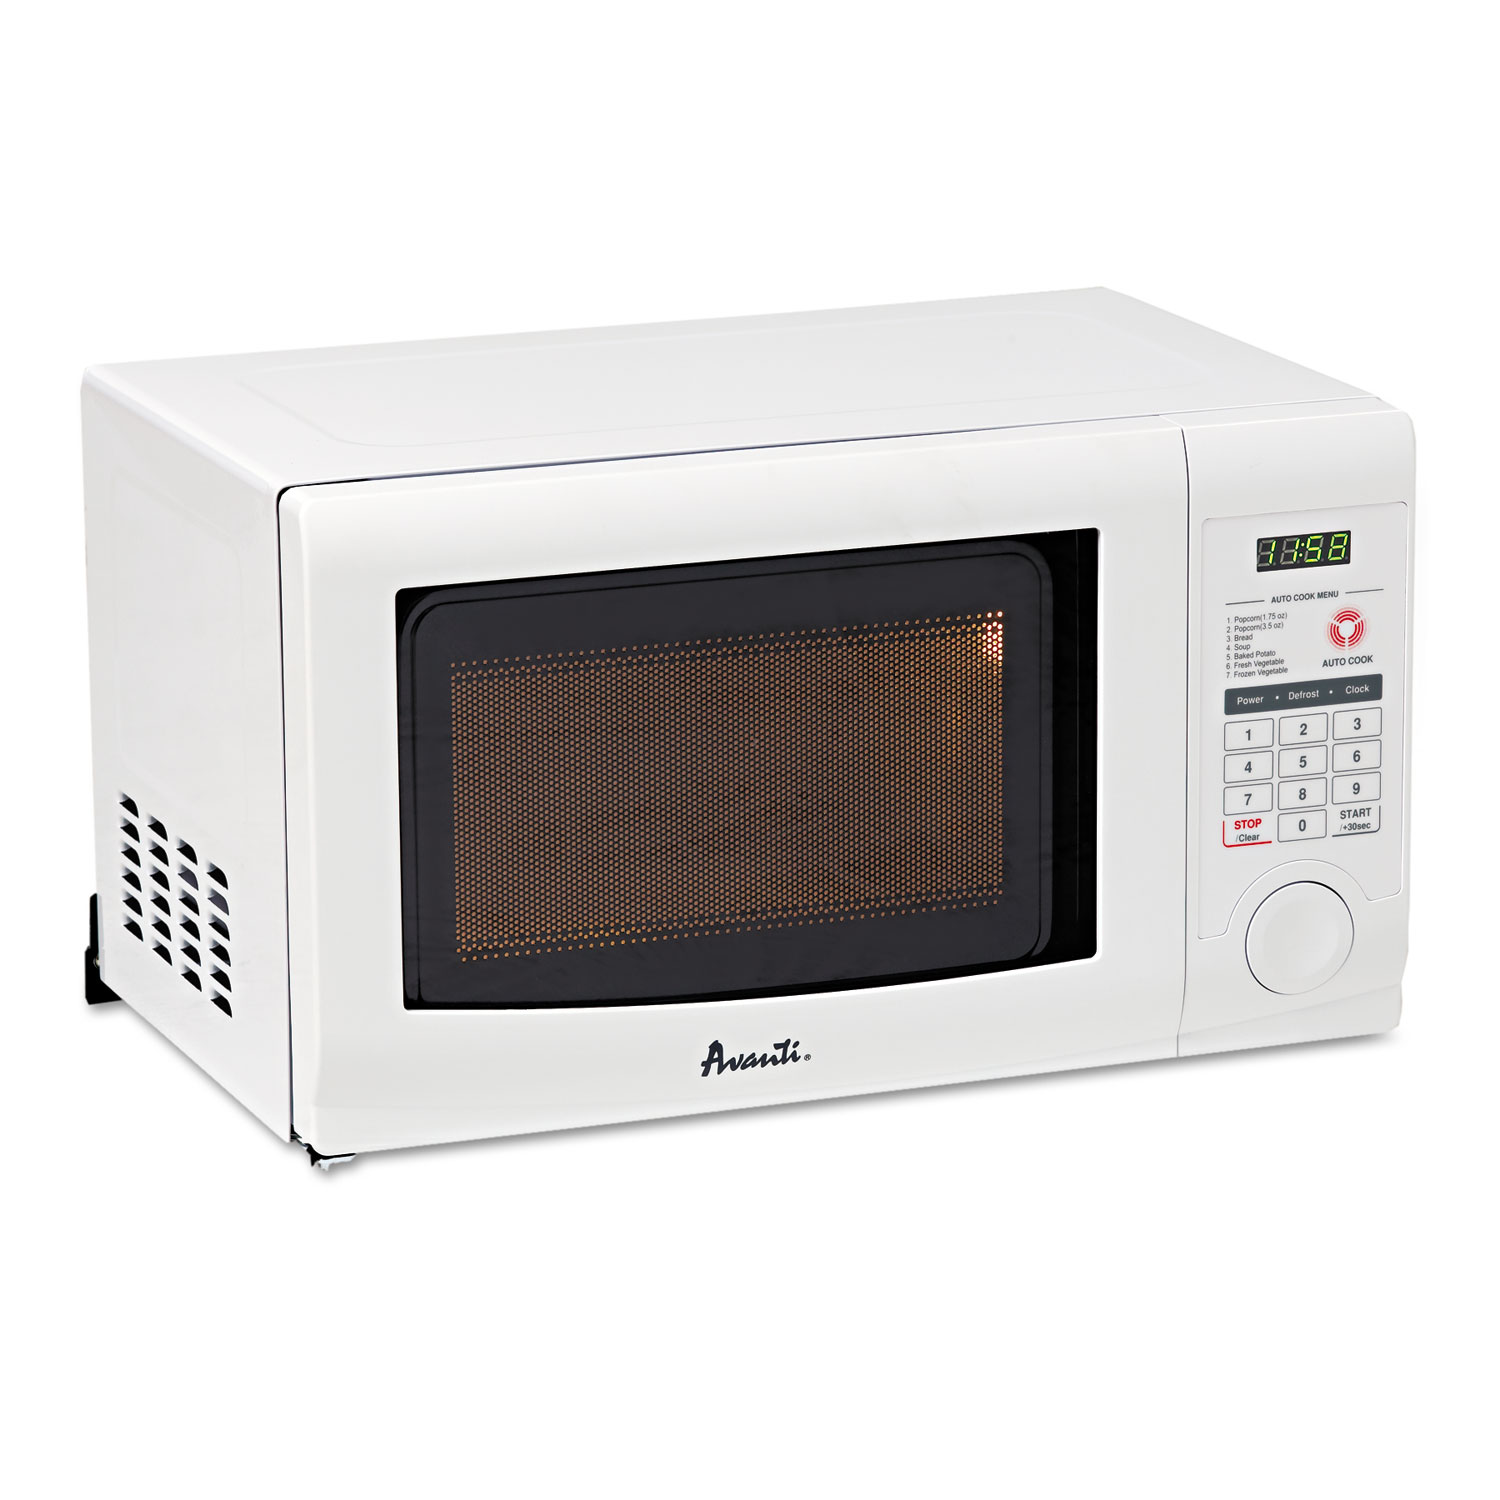  Avanti MO7191TW 0.7 Cubic Foot Capacity Microwave Oven, 700 Watts, White (AVAMO7191TW) 